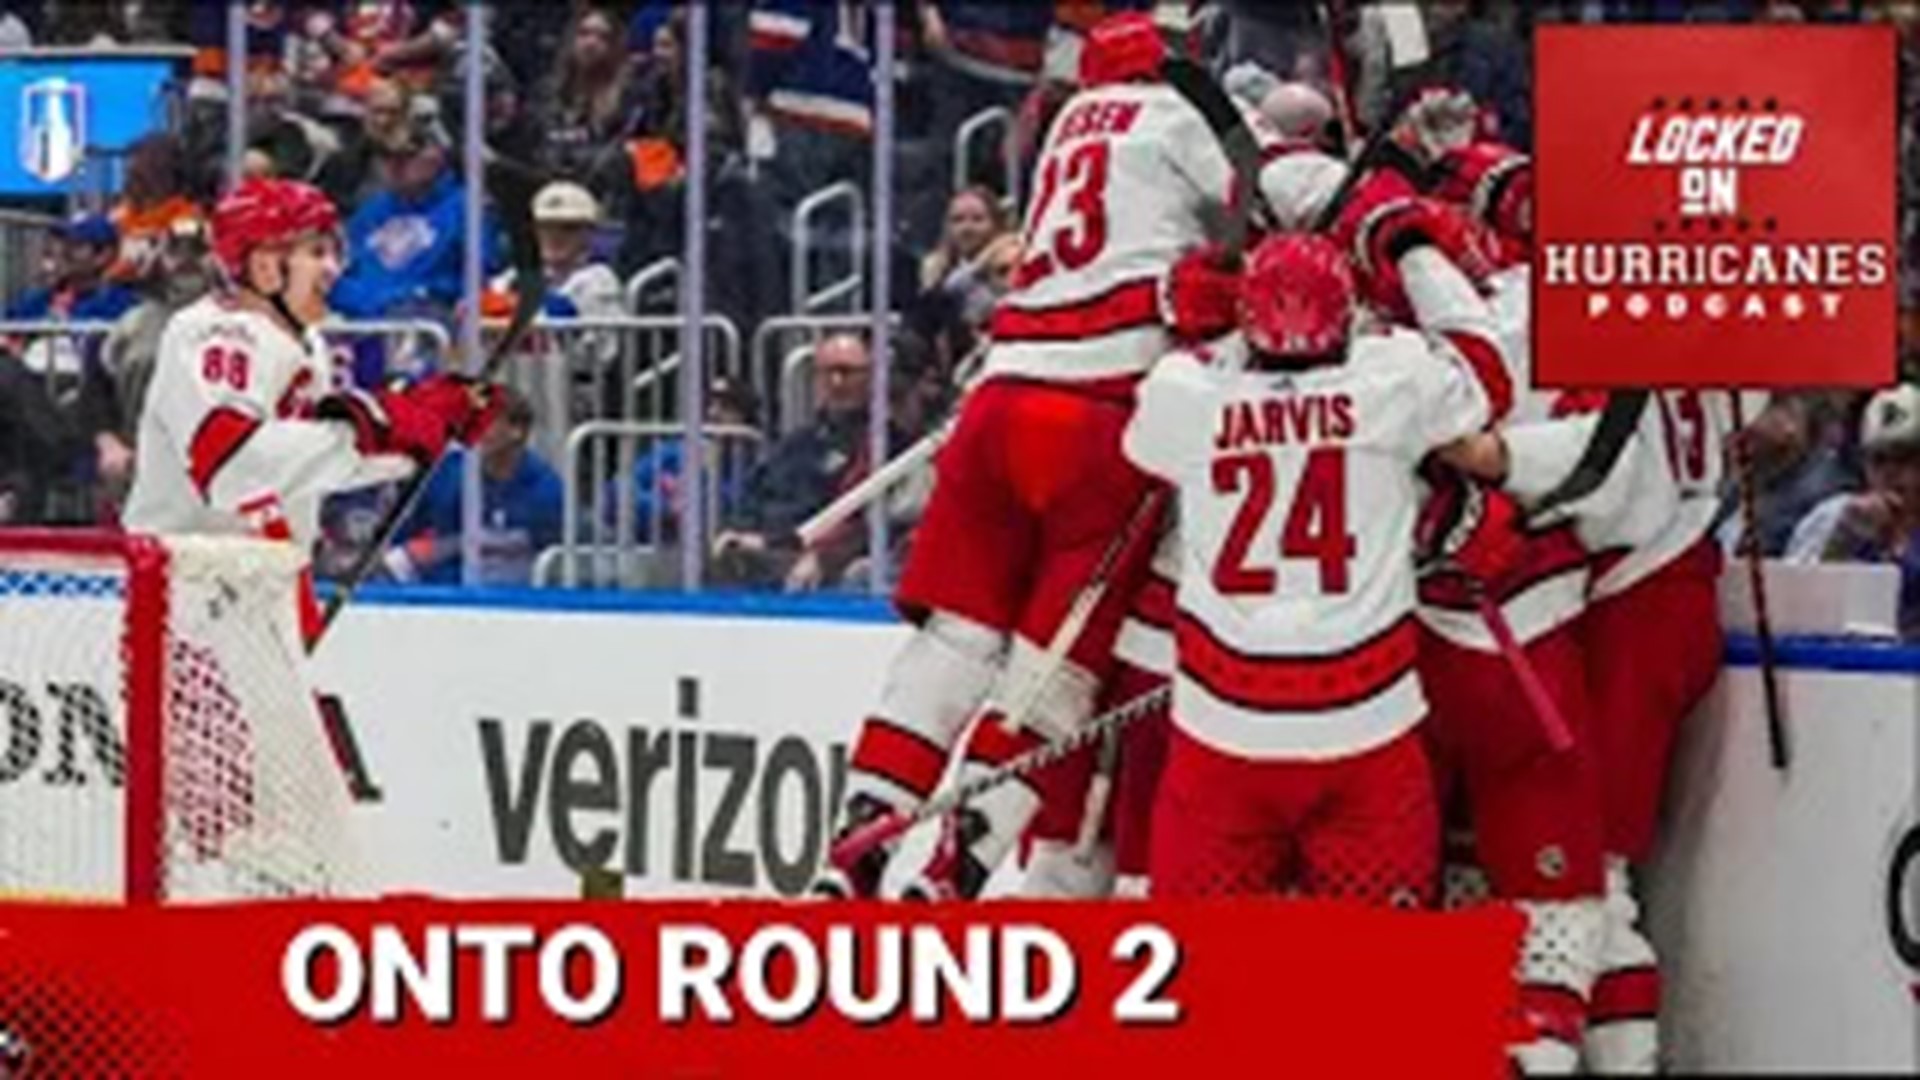 Hurricanes beat Devils to open 2nd round of NHL playoffs